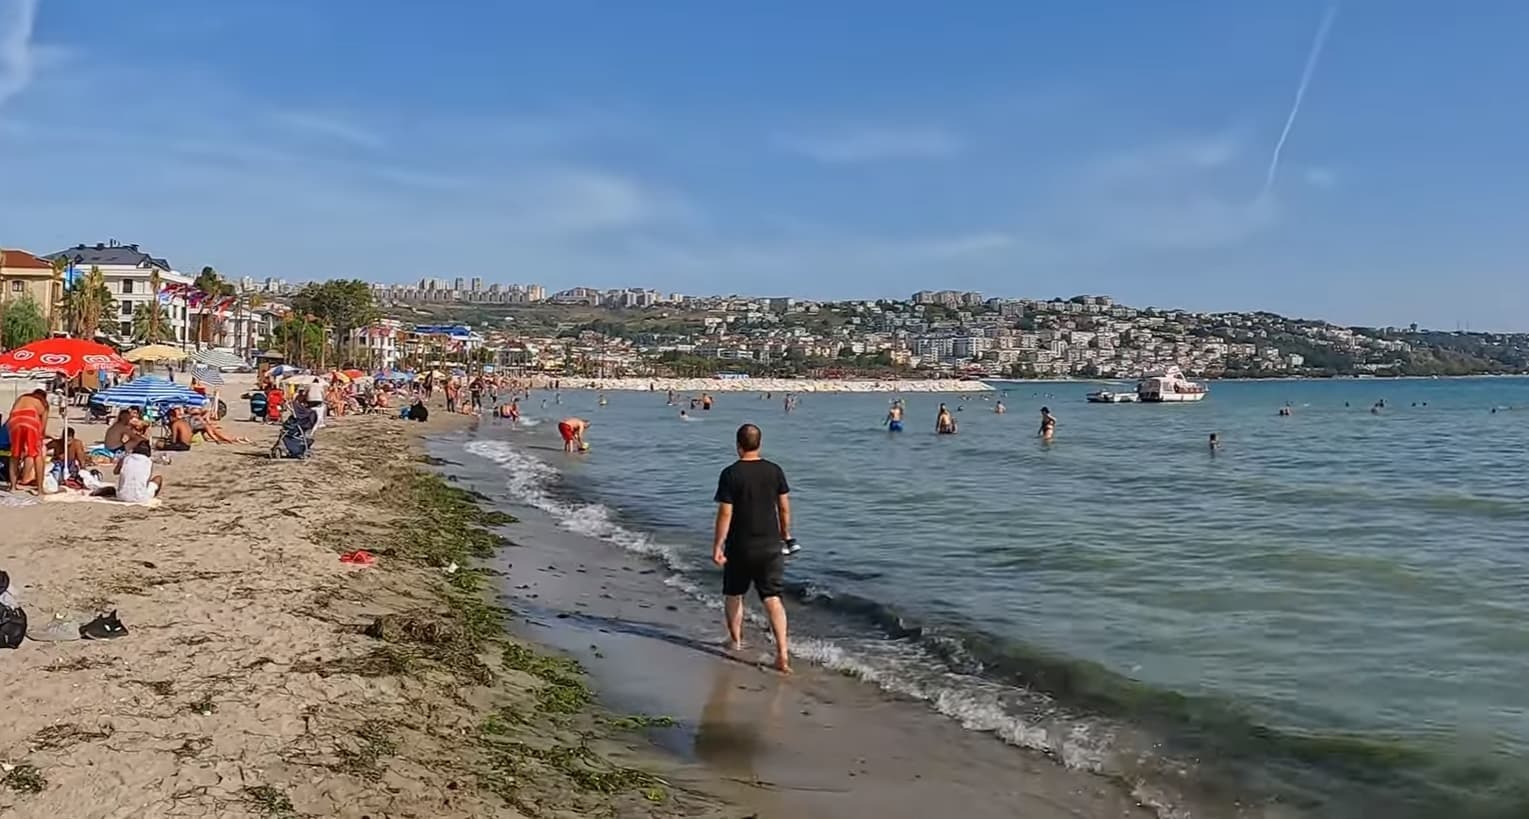 My experience visiting Buyukcekmece beach